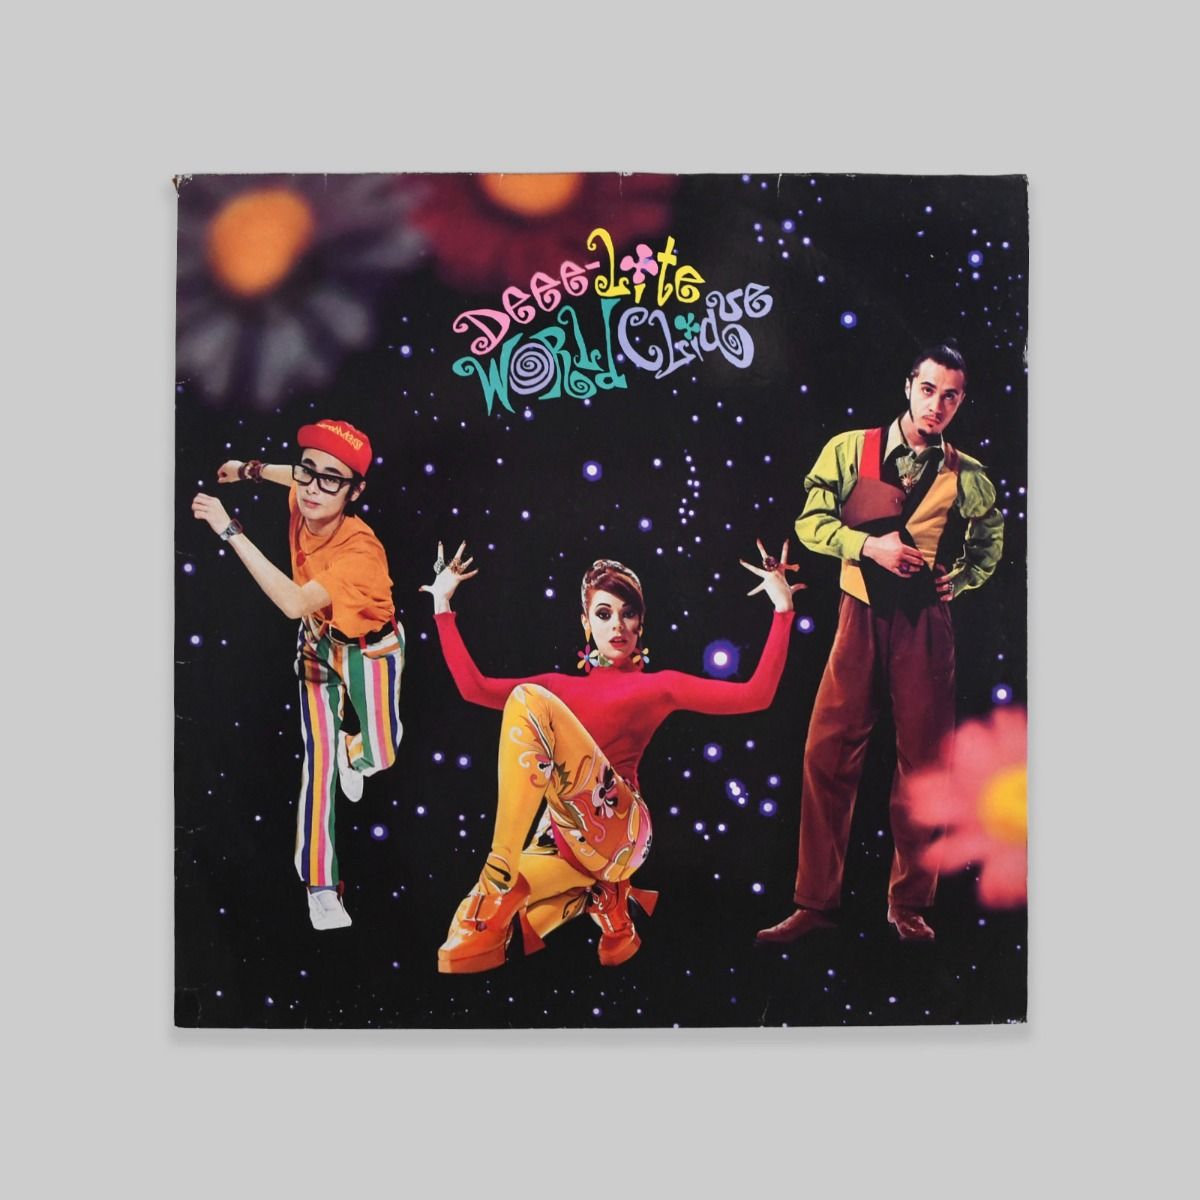 Deee-Lite – World Clique 12" LP